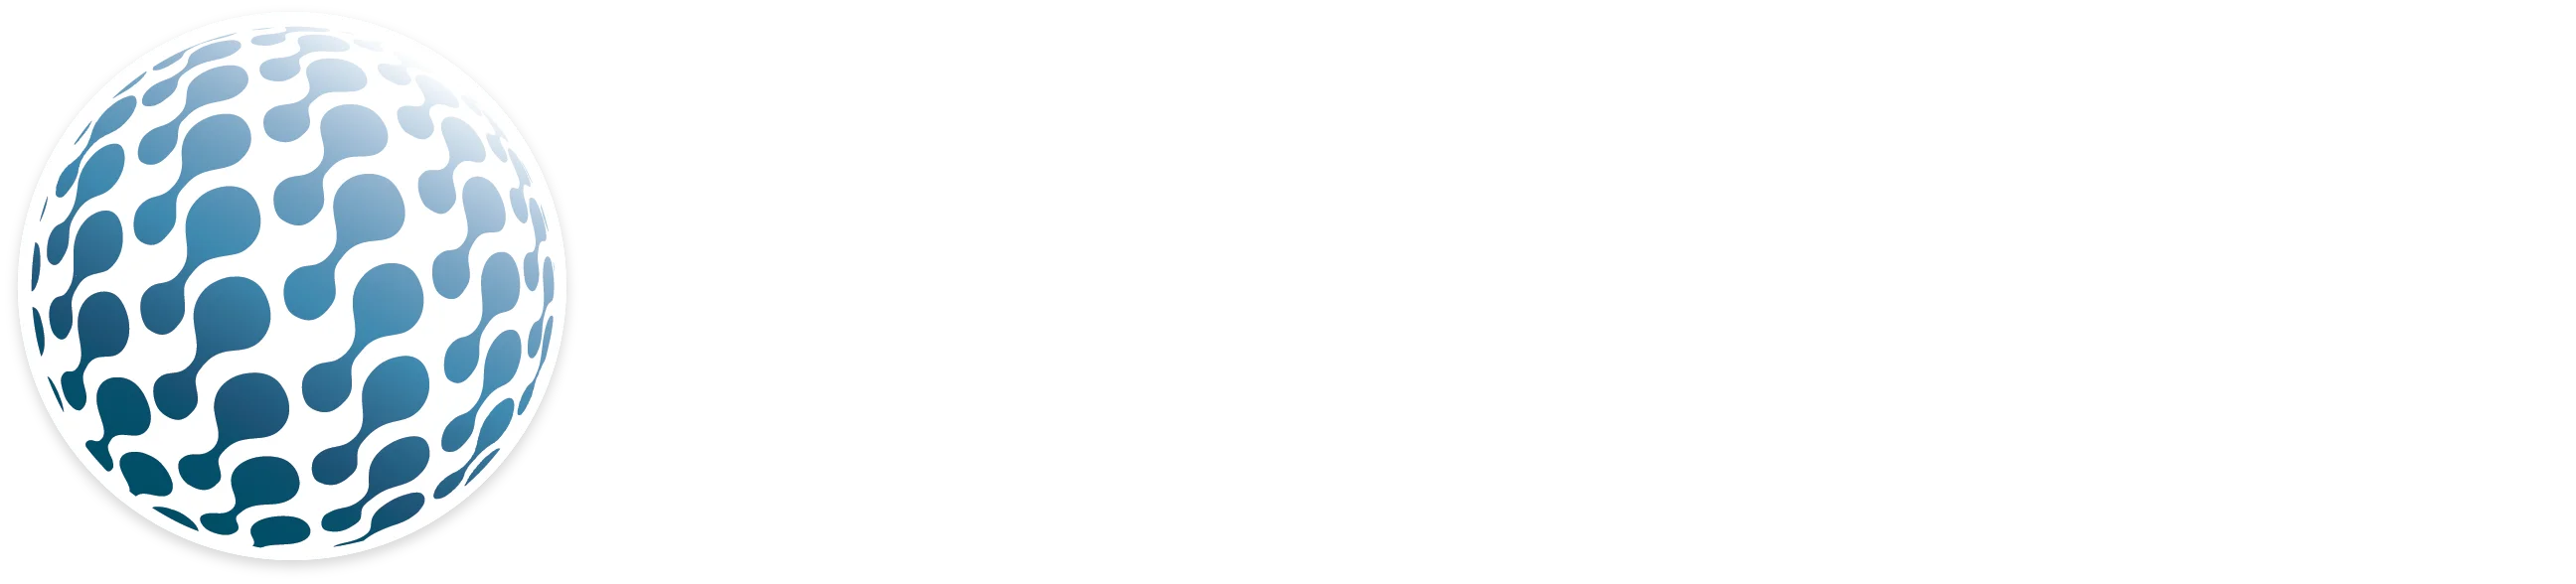 The Metal Company